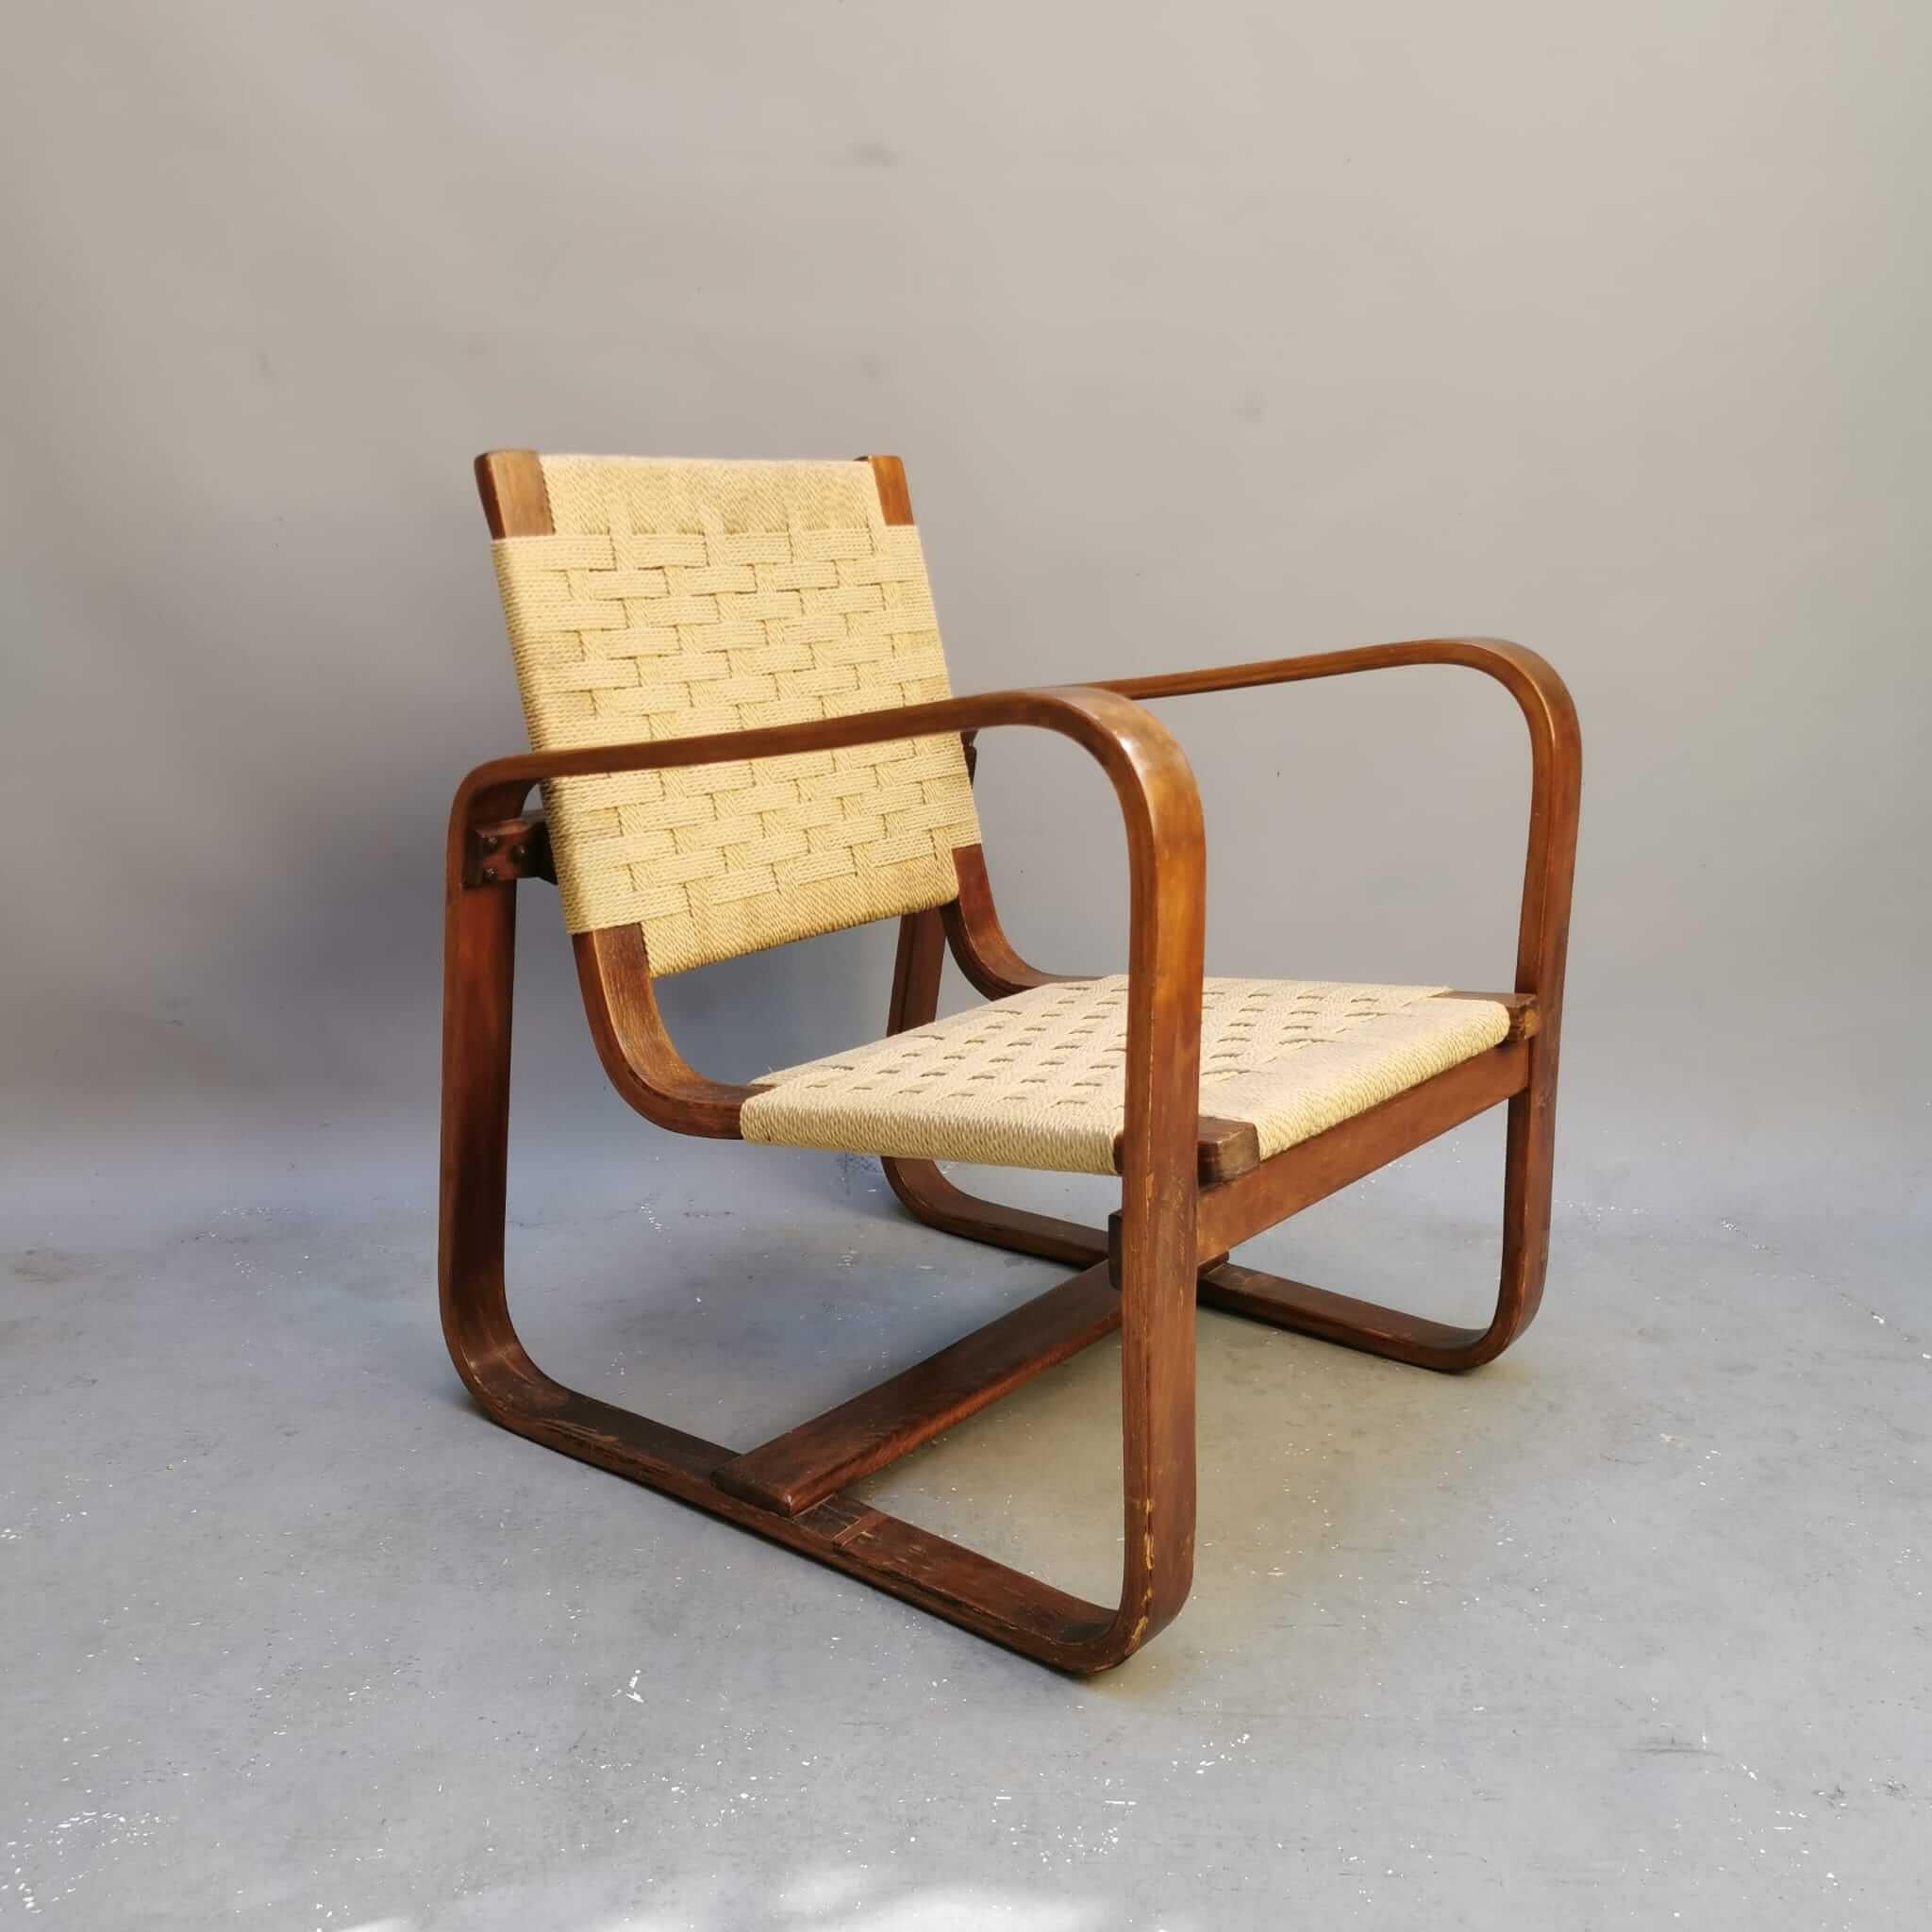 Italian Bocconi Chair, Giuseppe Pagano